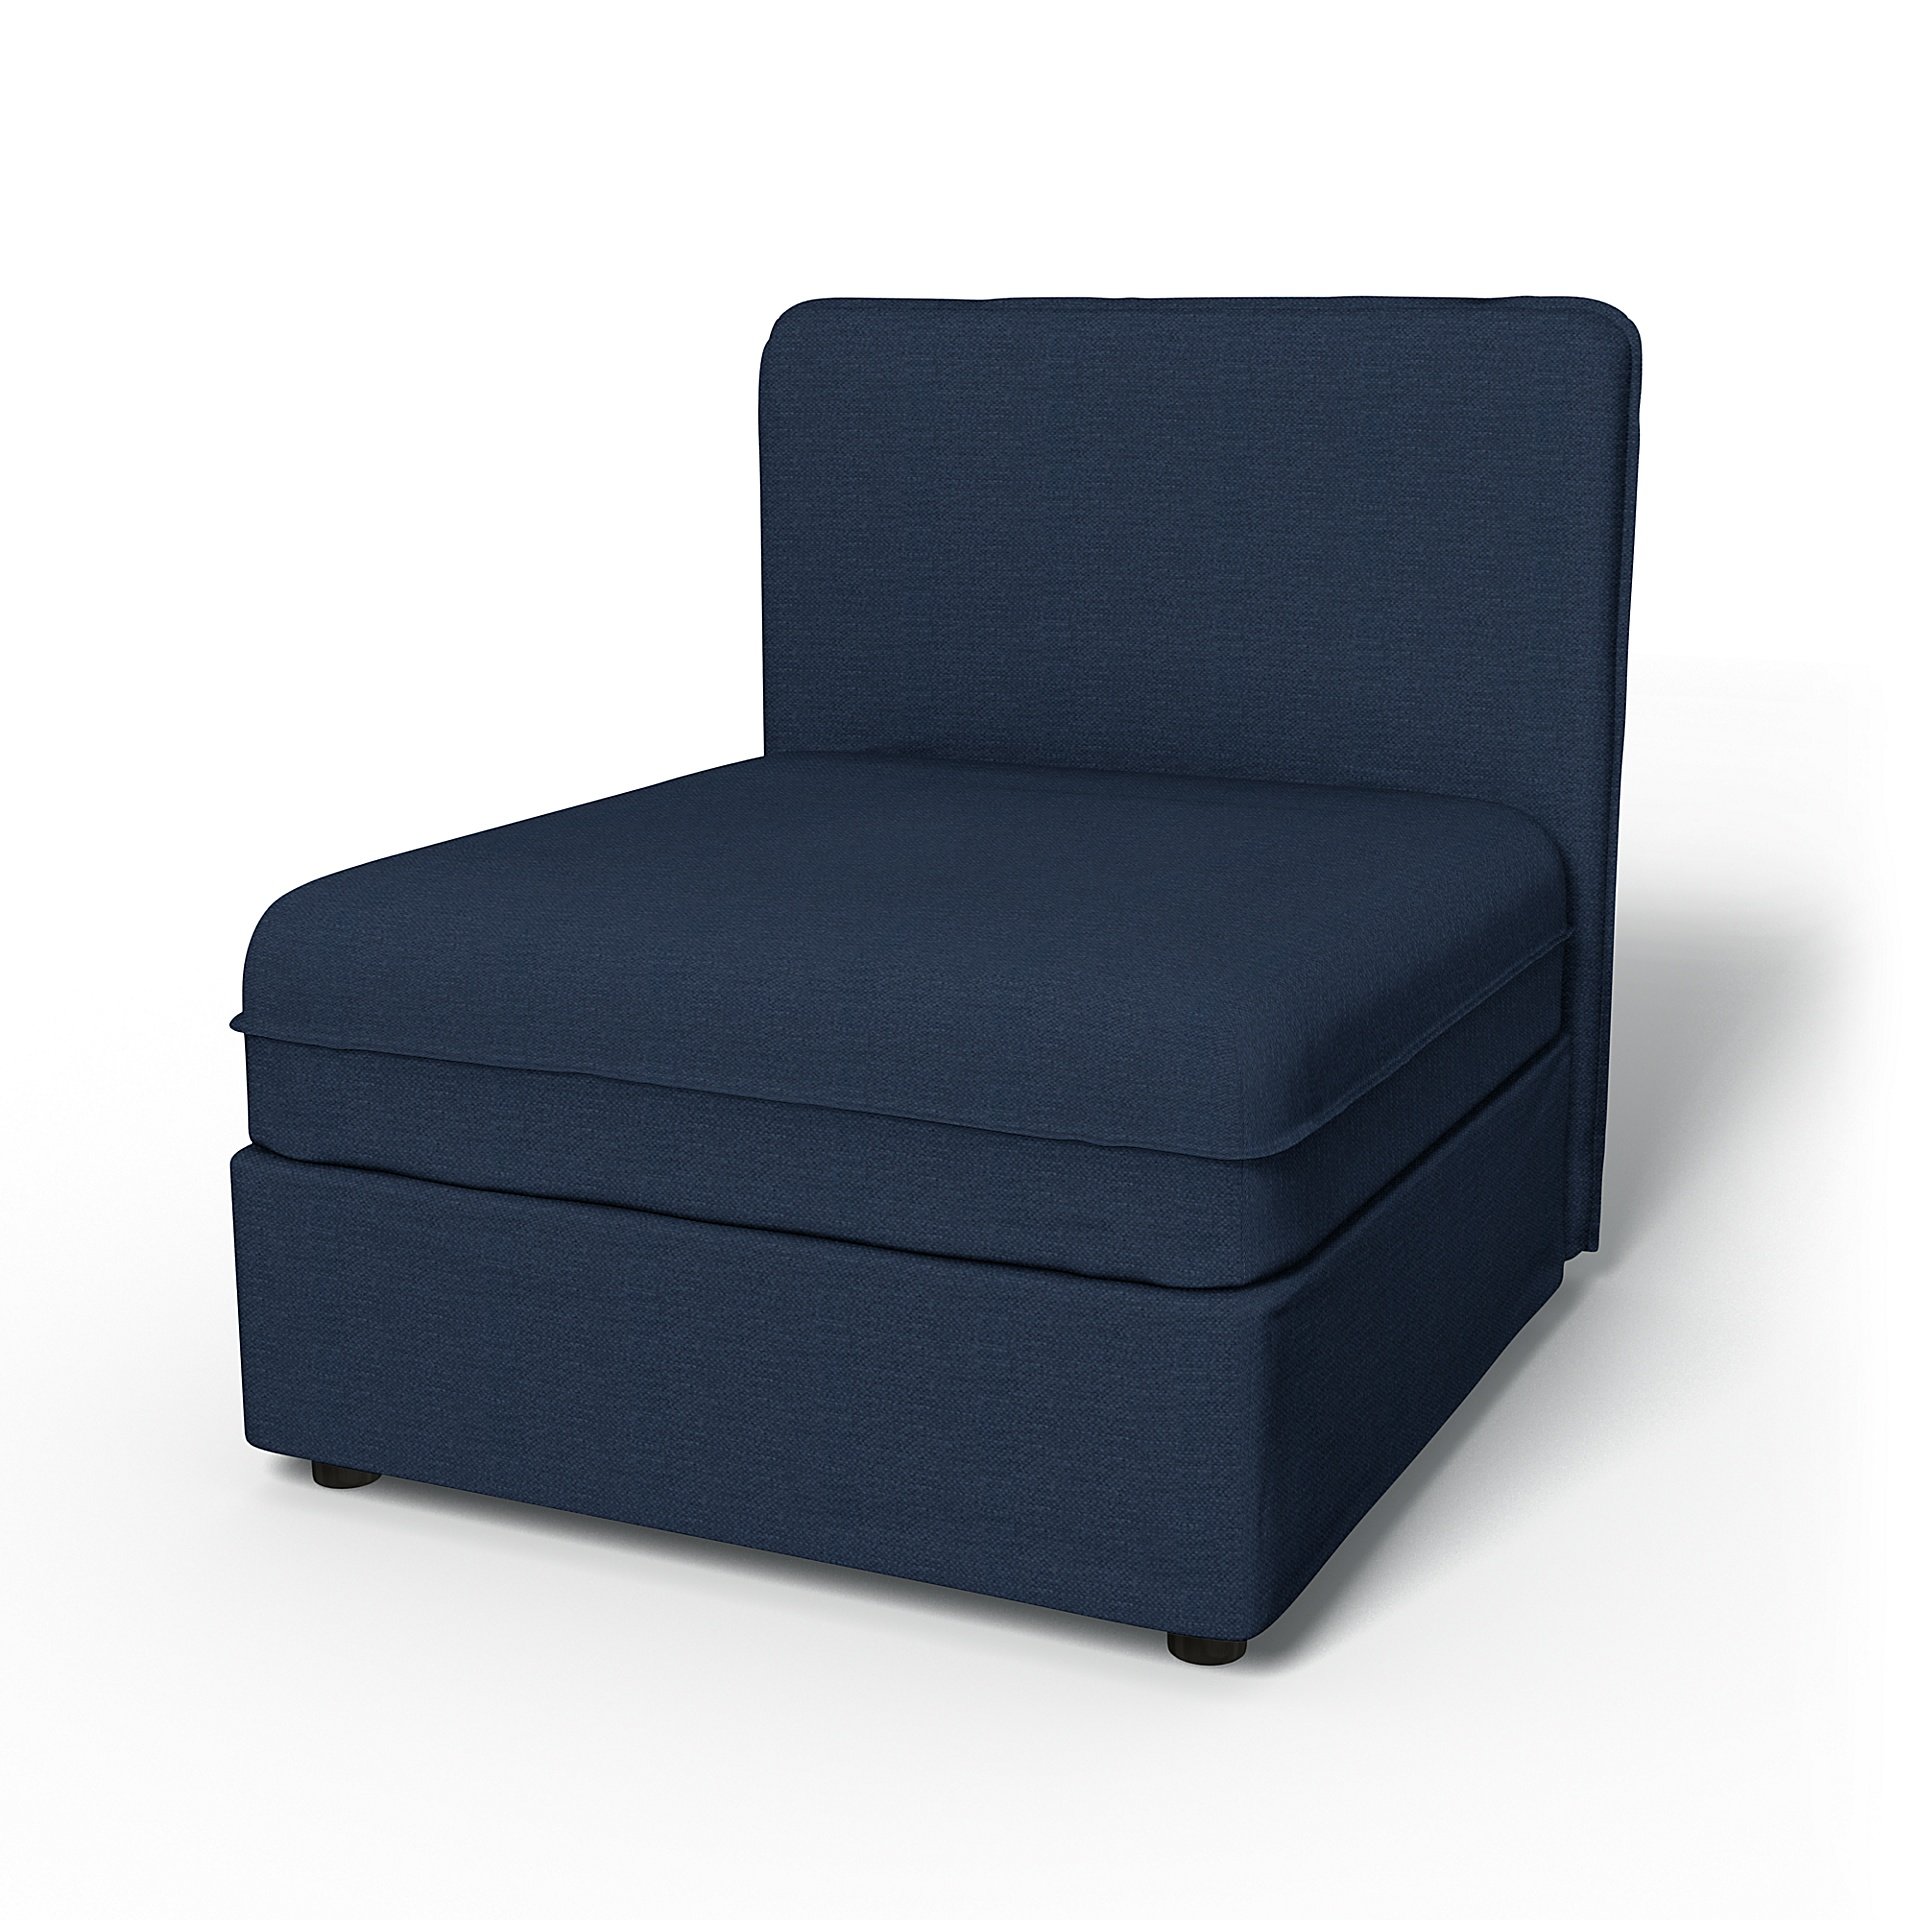 IKEA - Vallentuna Seat Module with Low Back Cover 80x80cm 32x32in, Navy Blue, Linen - Bemz